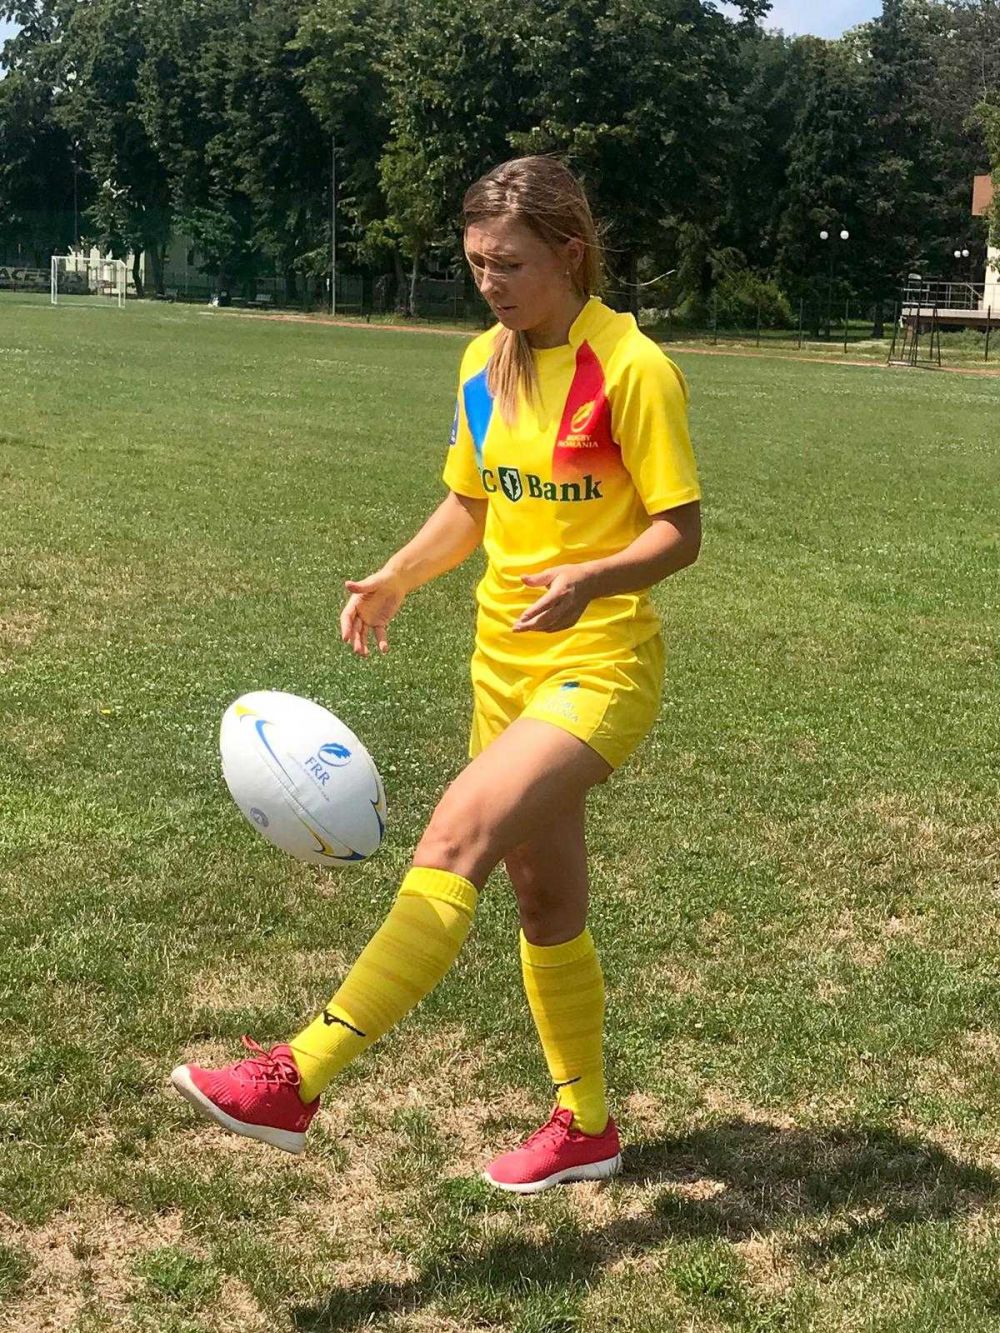 Ea e 'diriga' din nationala de rugby a Romaniei! Si-a mintit parintii ca face handbal ca sa poata merge la antrenamente! GALERIE FOTO_4